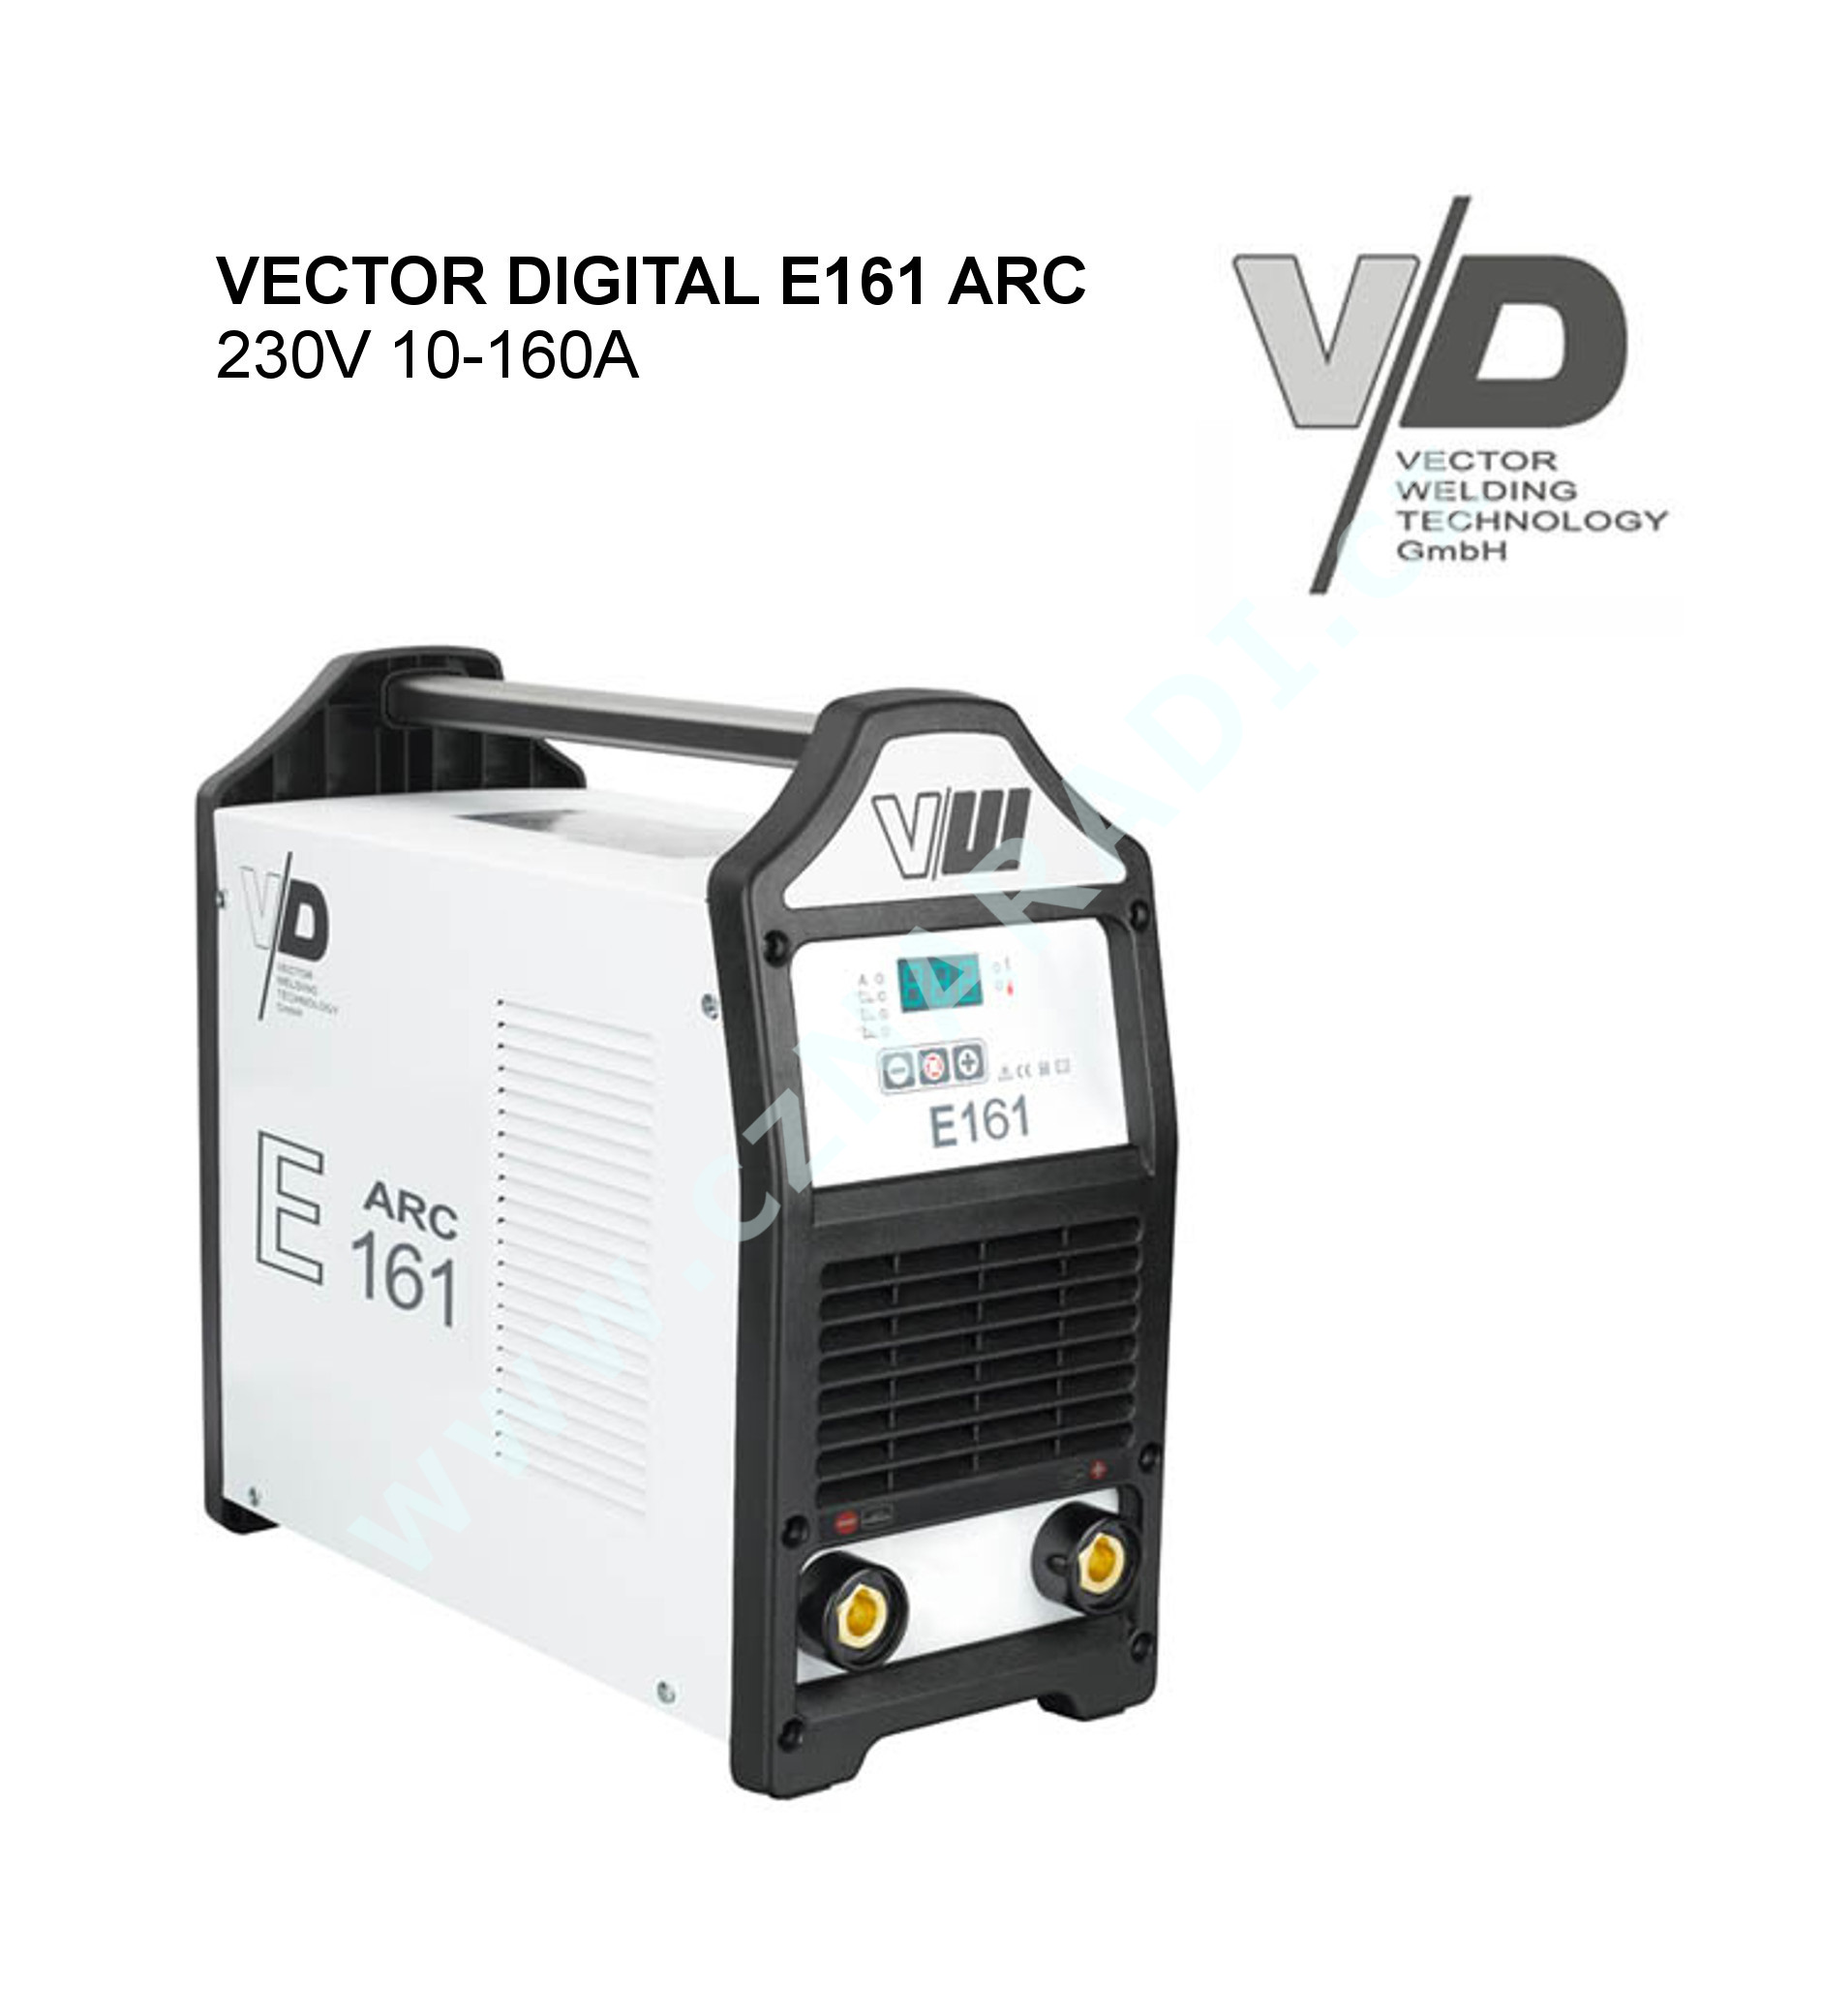  VECTOR DIGITAL E161 ARC 